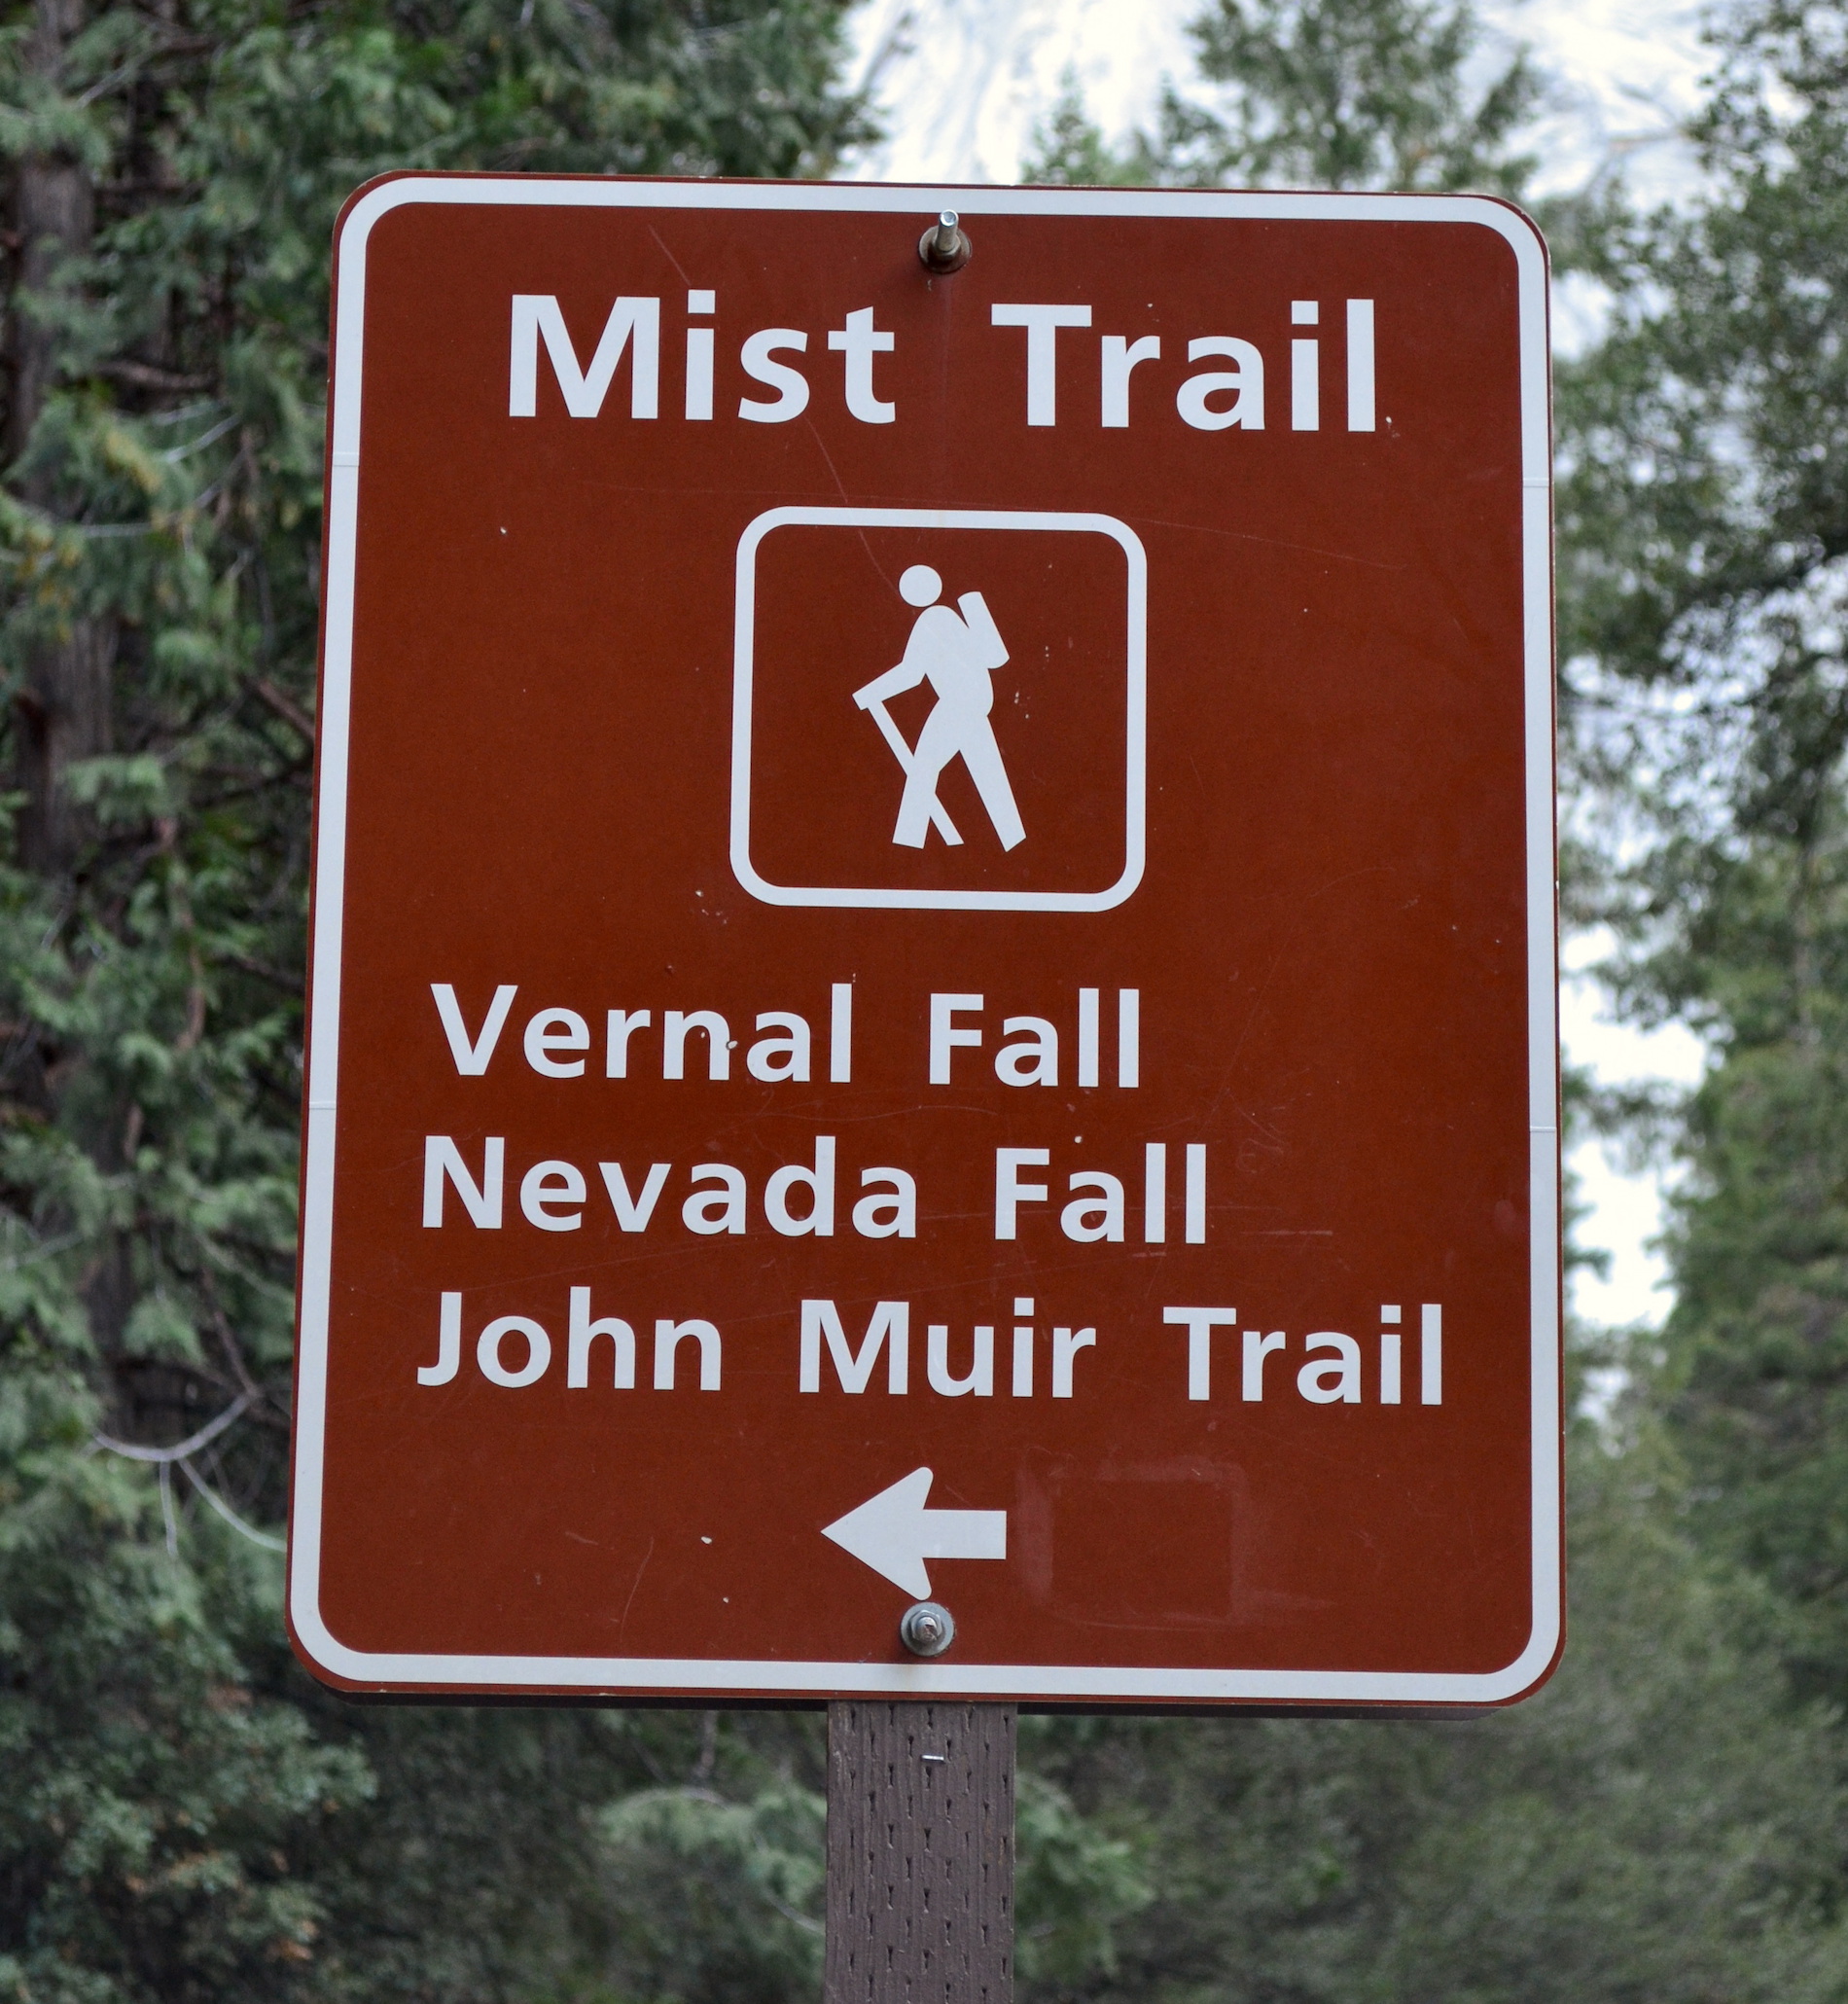 Trails from John Muir Trail-head carpark